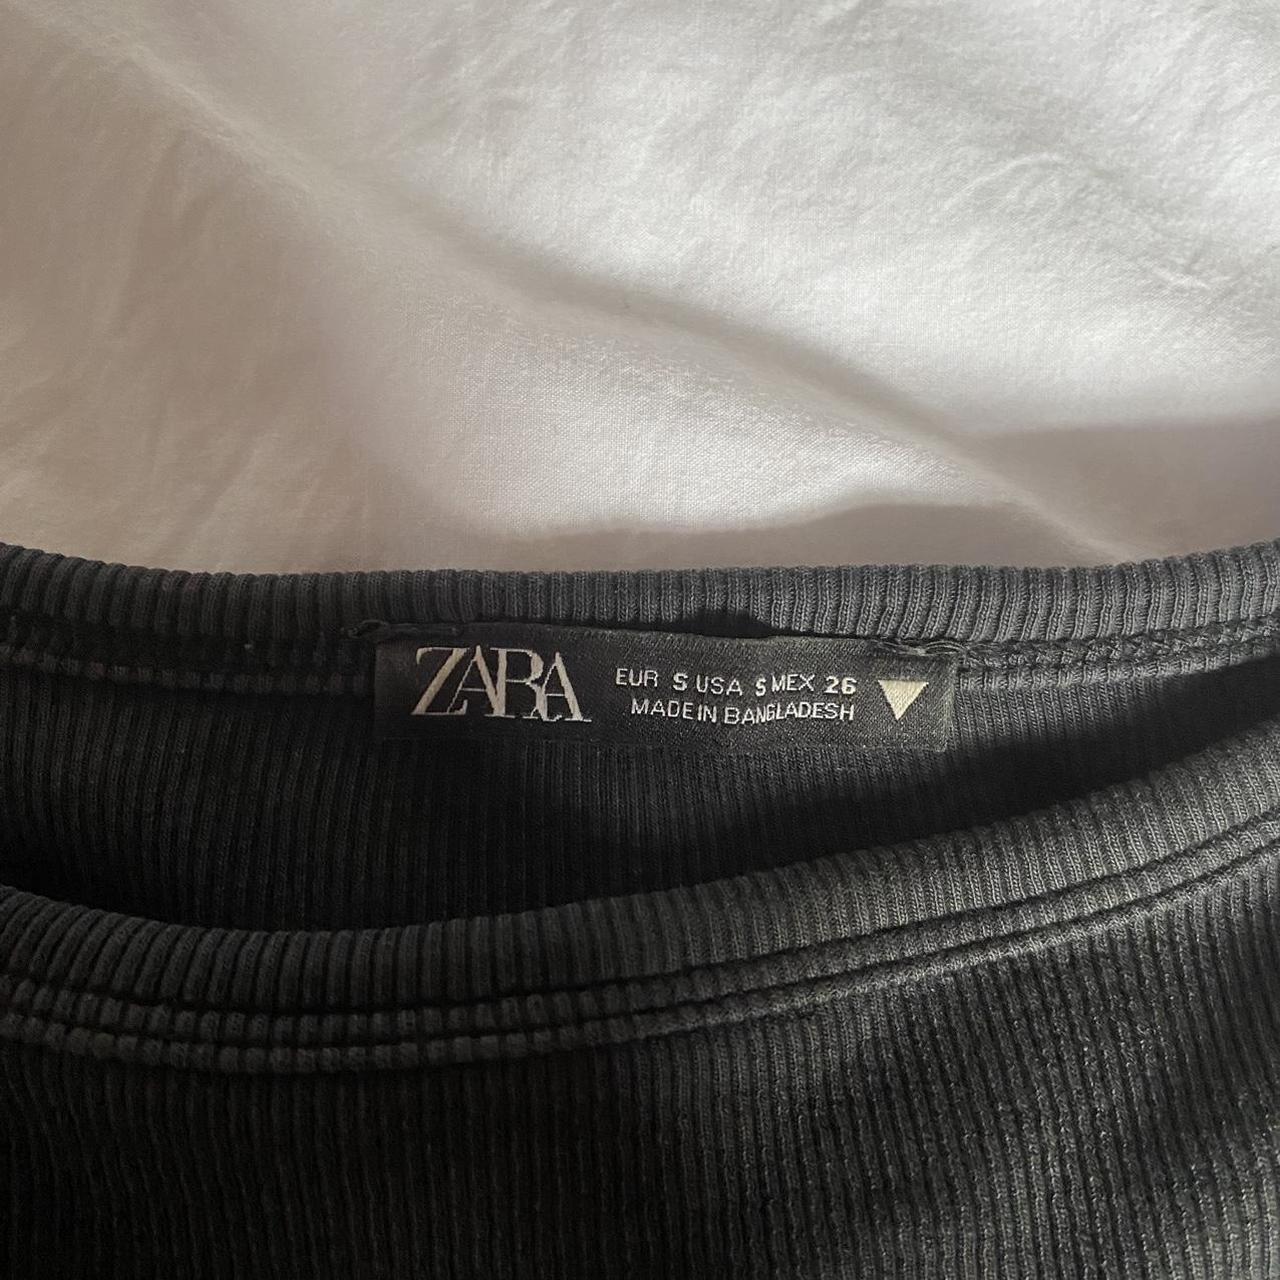 Zara black crop top Size small Great quality - Depop